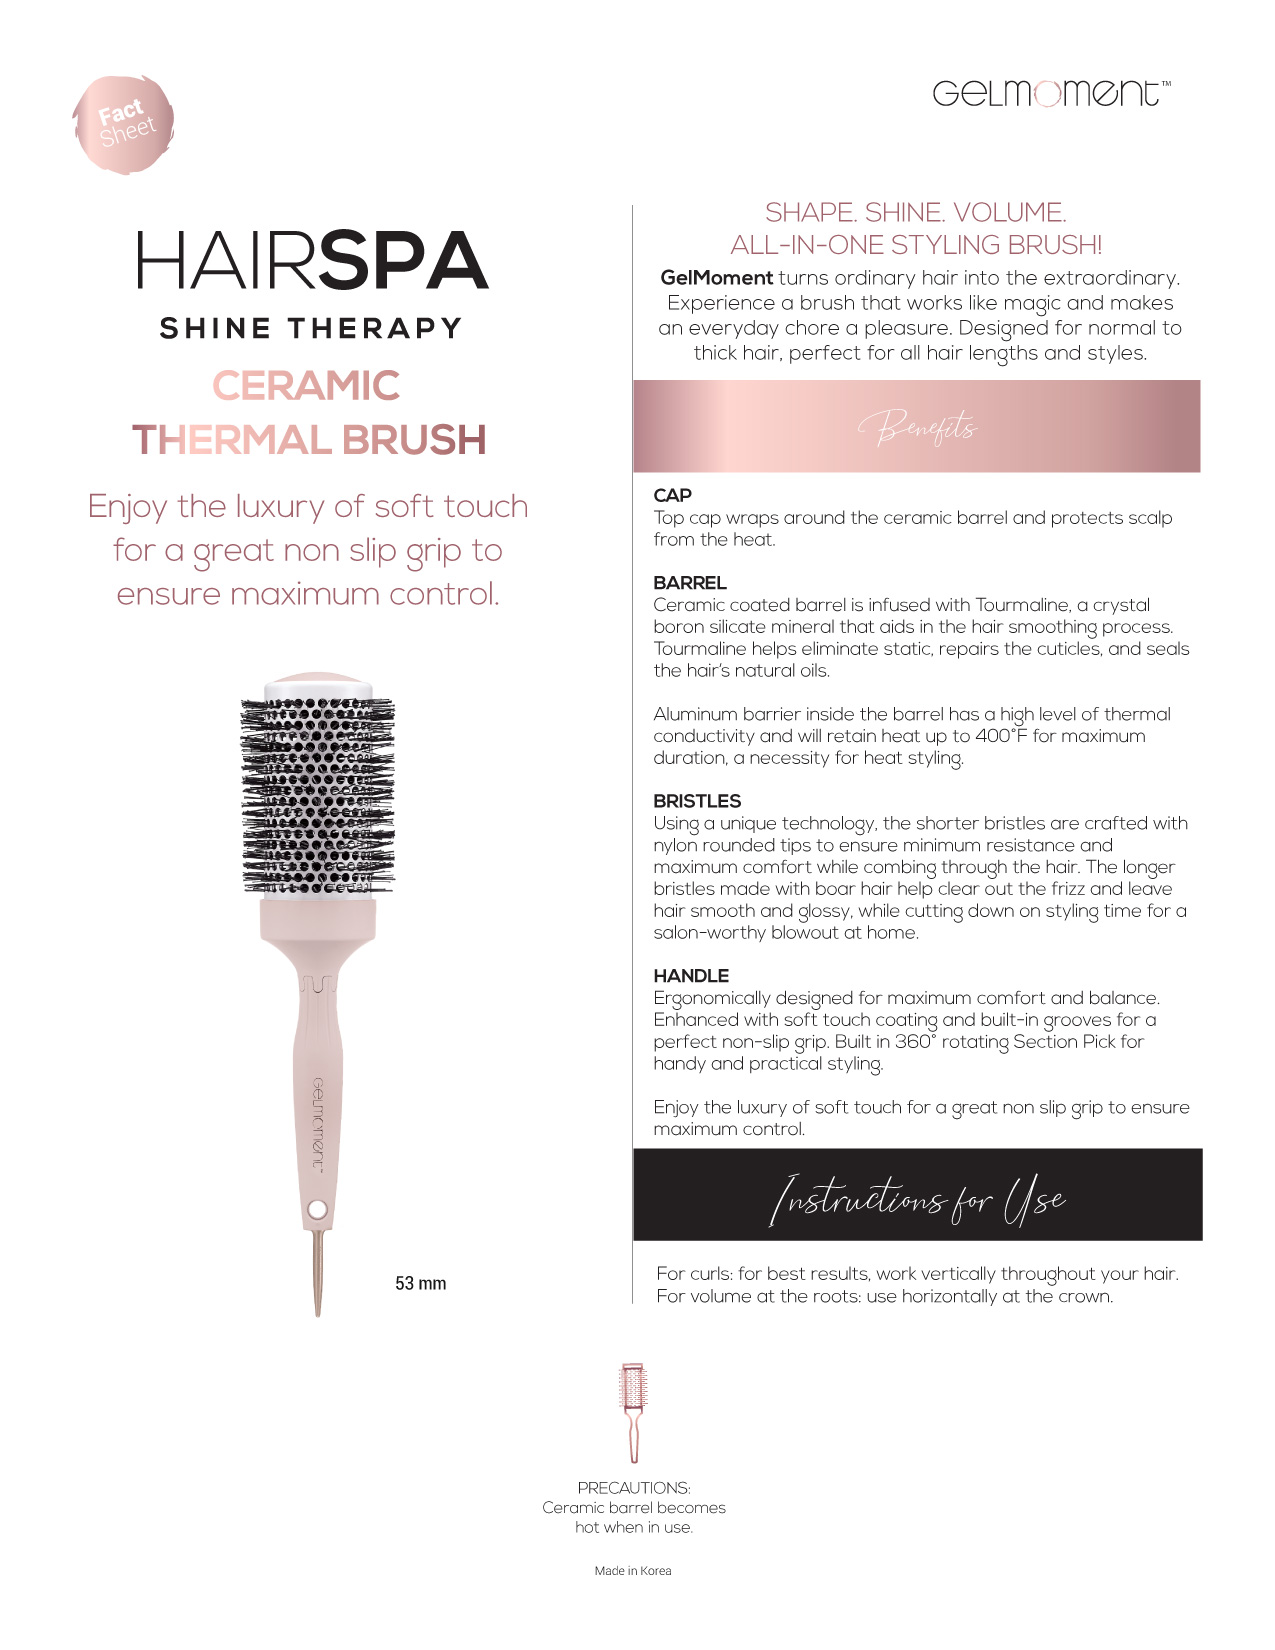 HairSpa Thermal Brush